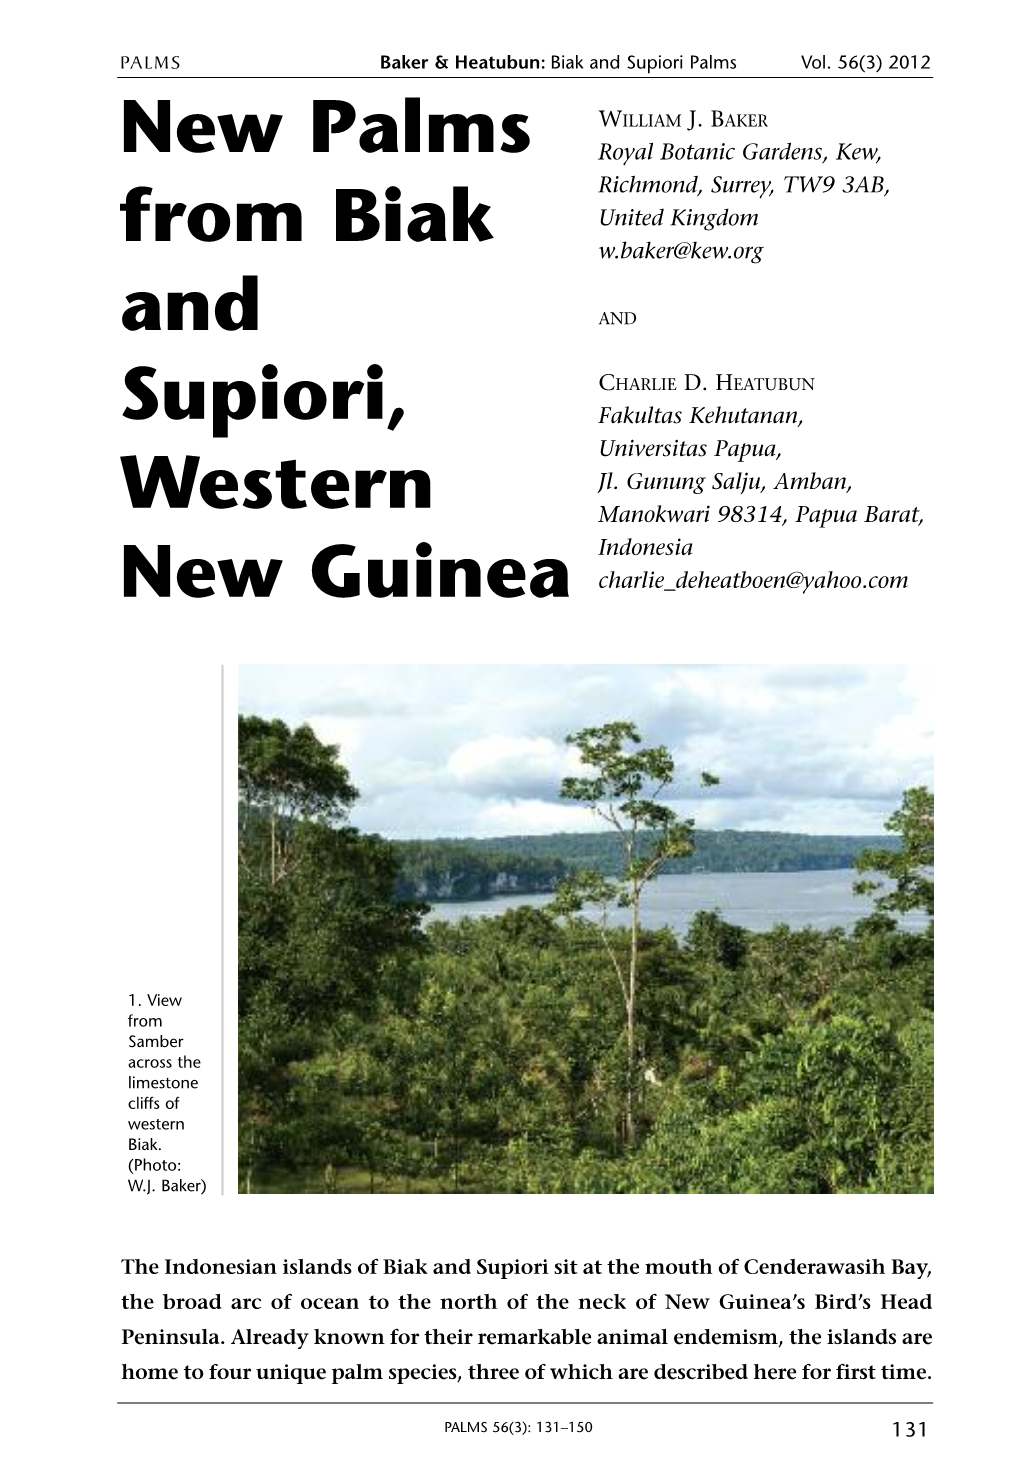 New Palms from Biak and Supiori, Western New Guinea